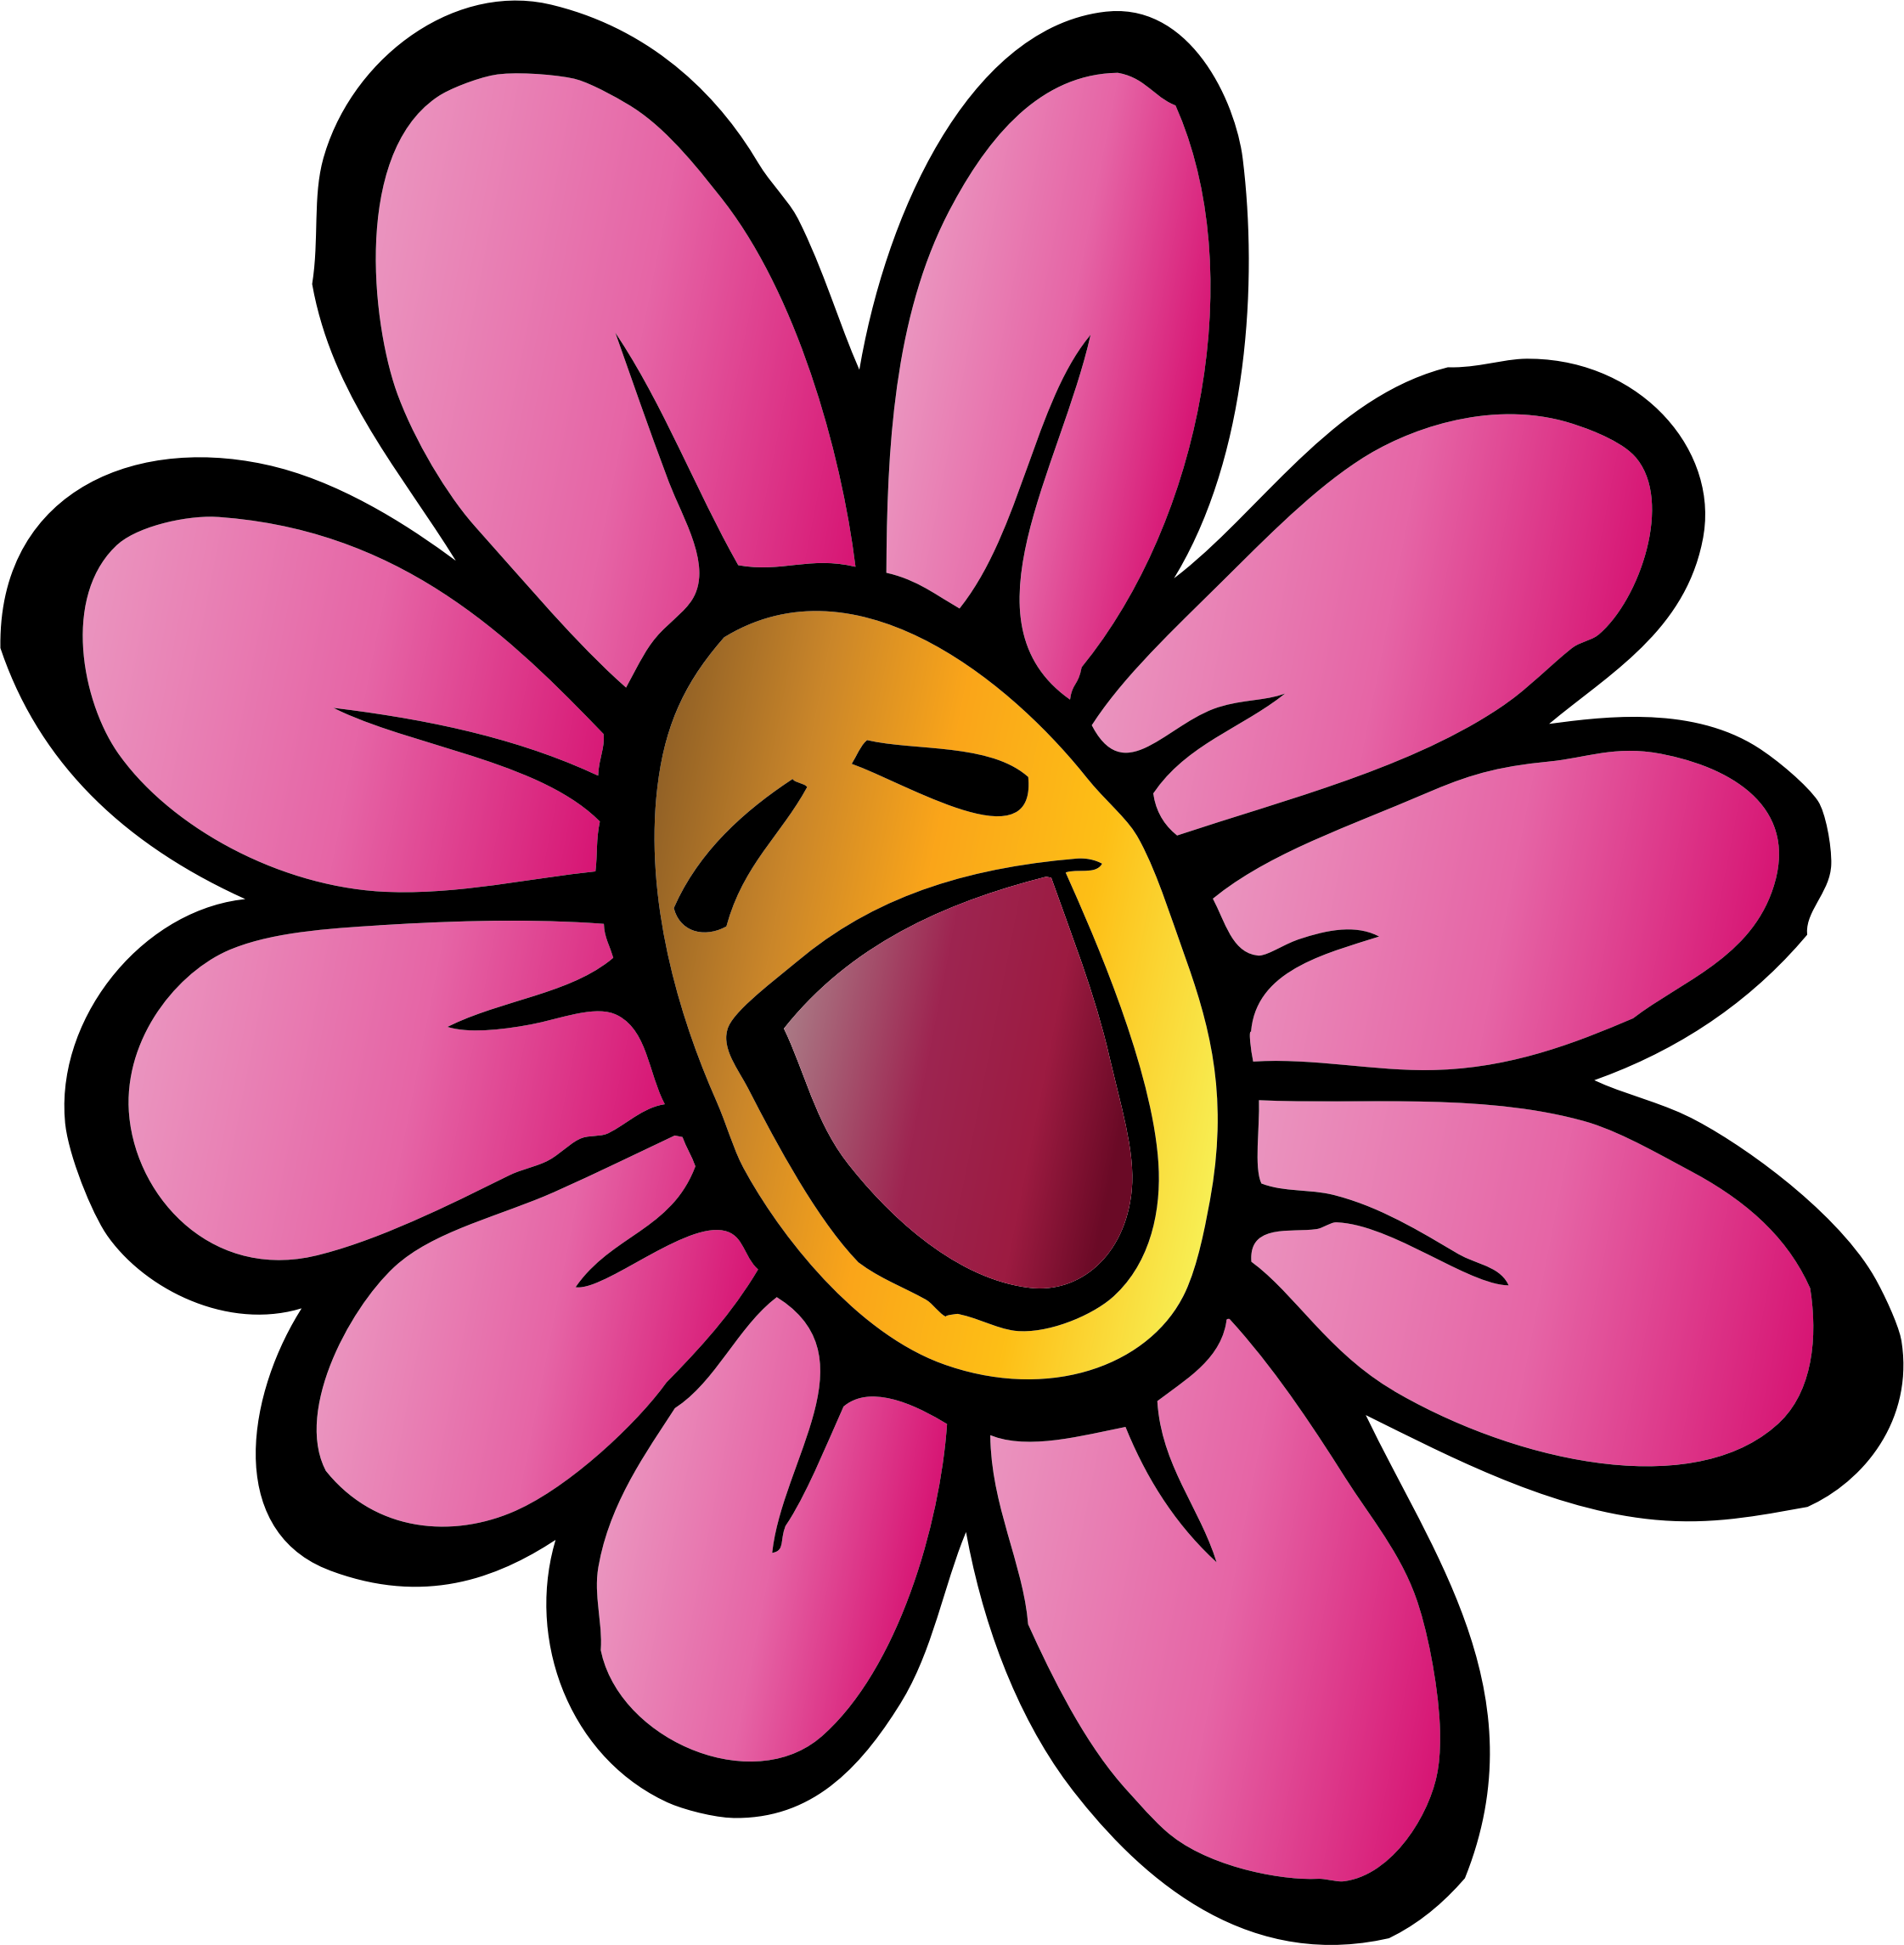 Flower clipart smile. Raseone happy big image